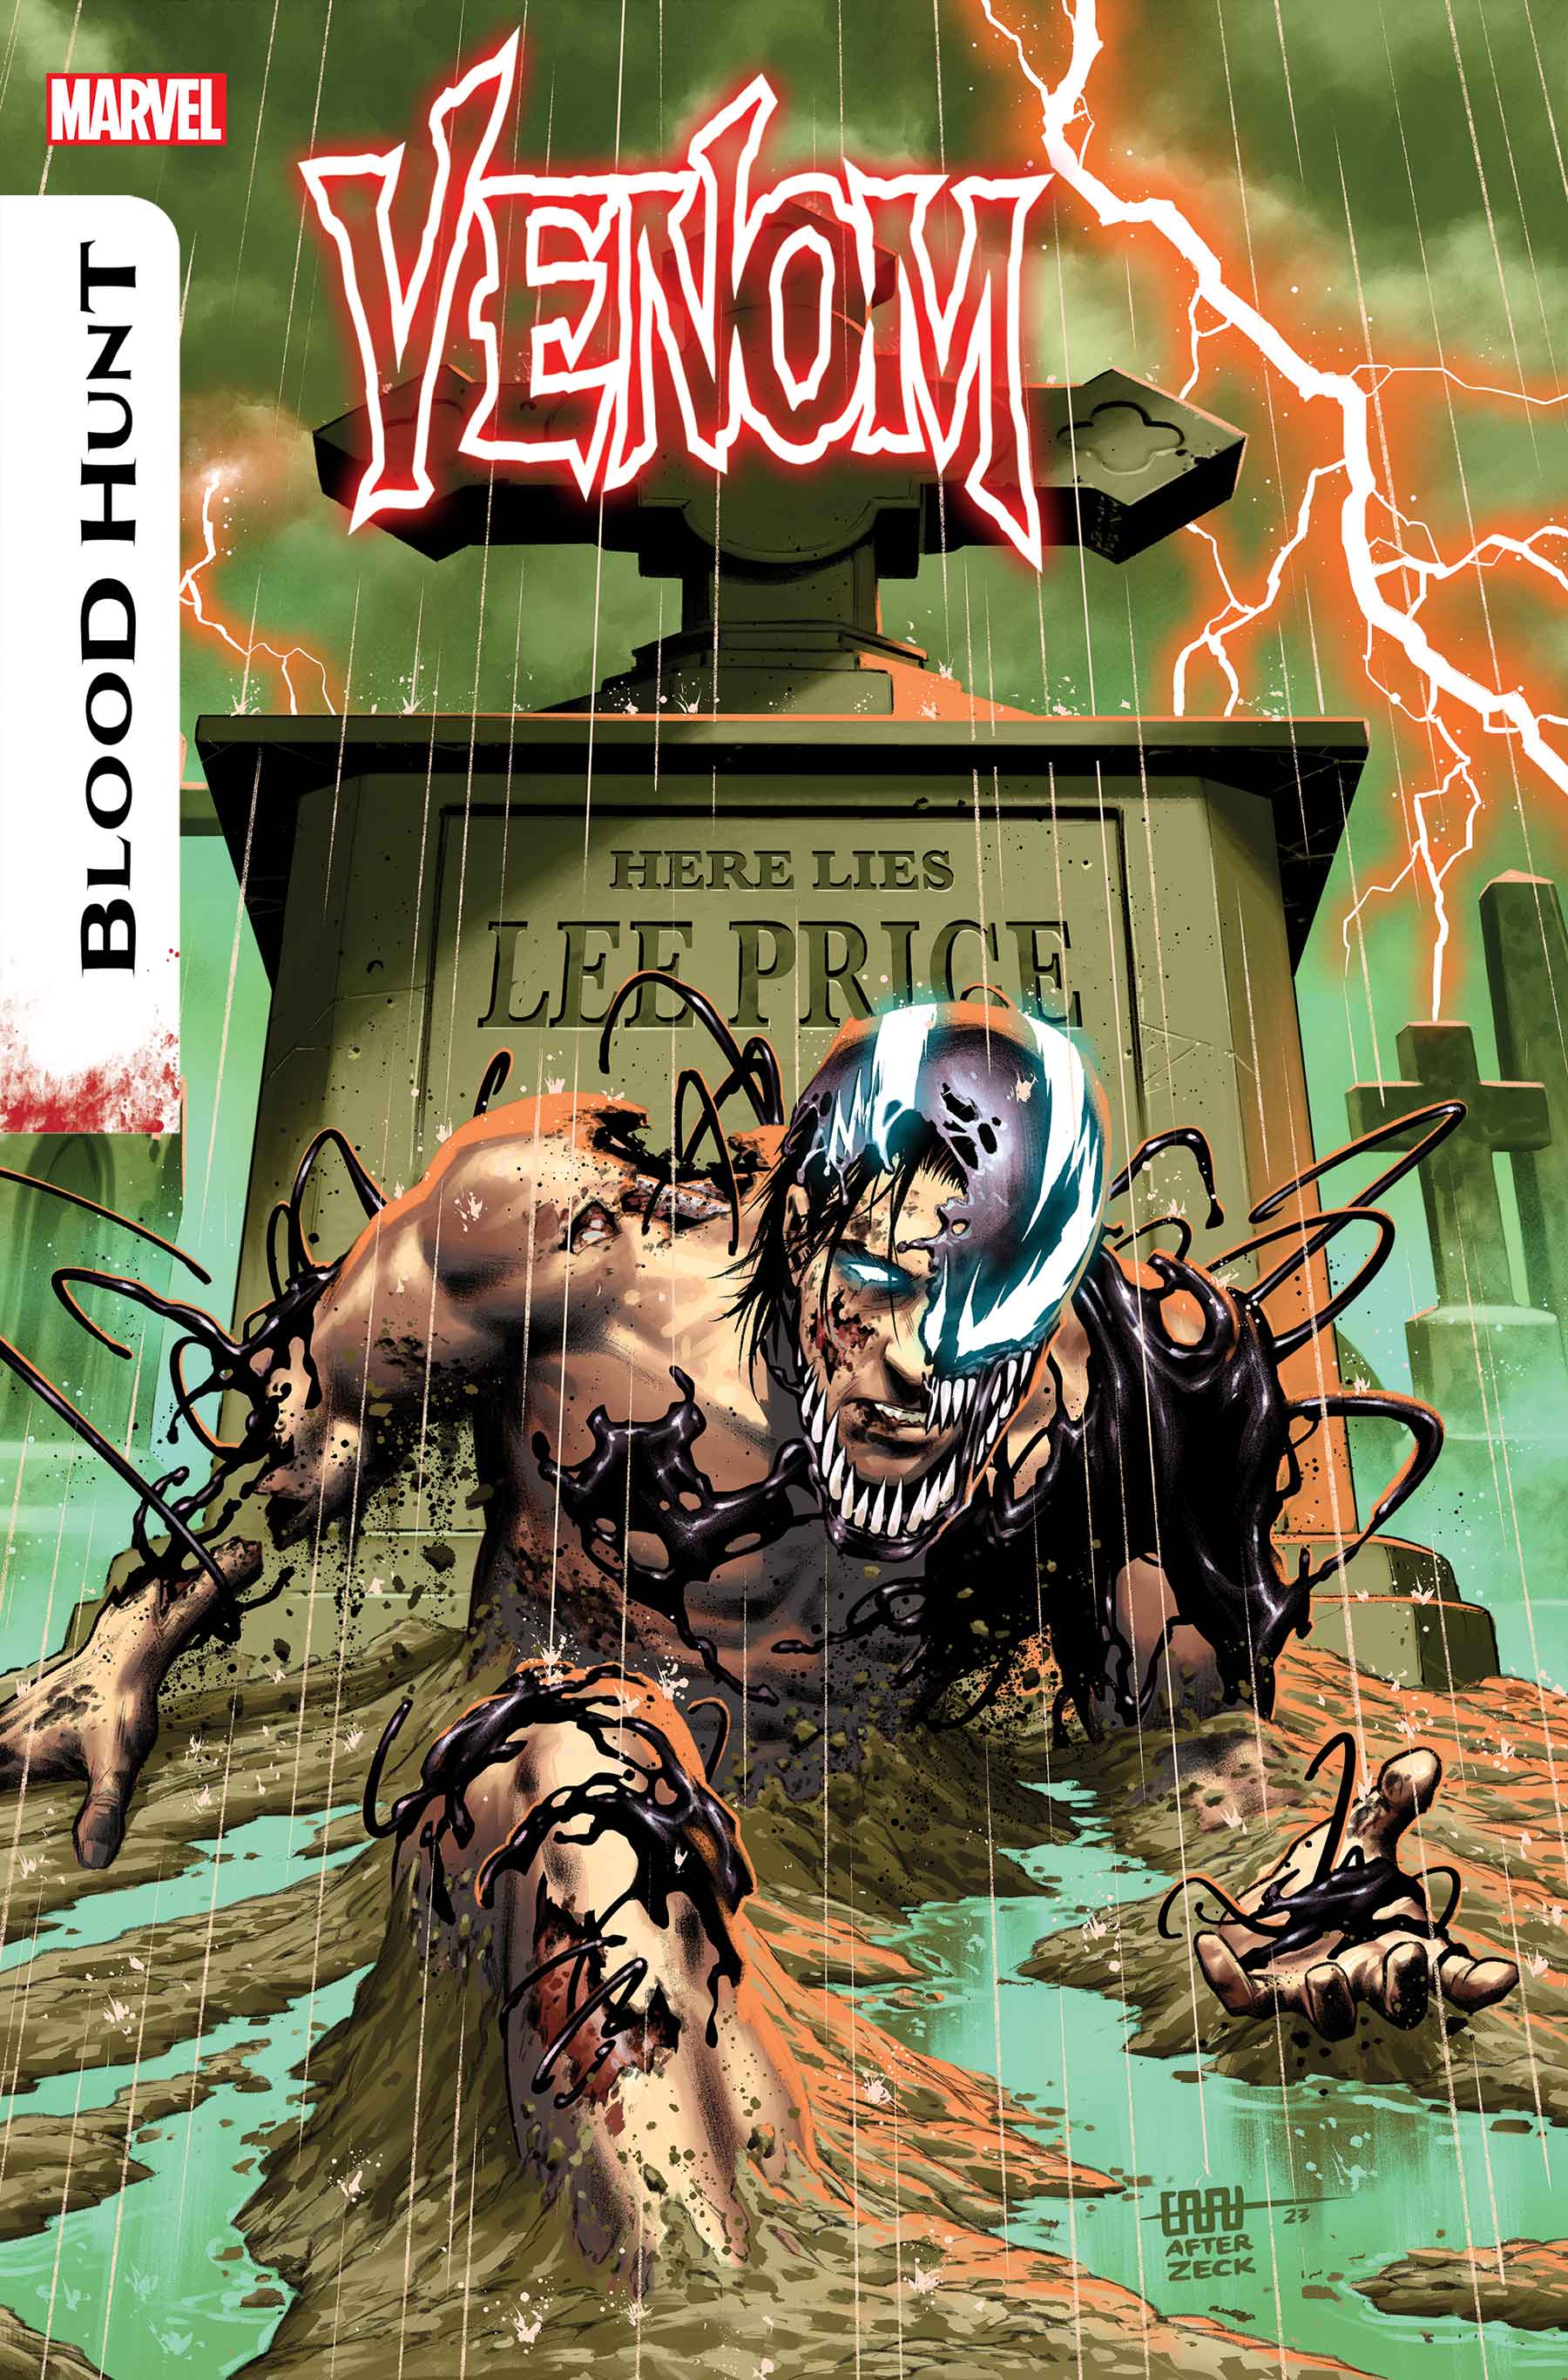 Venom (2021) #33